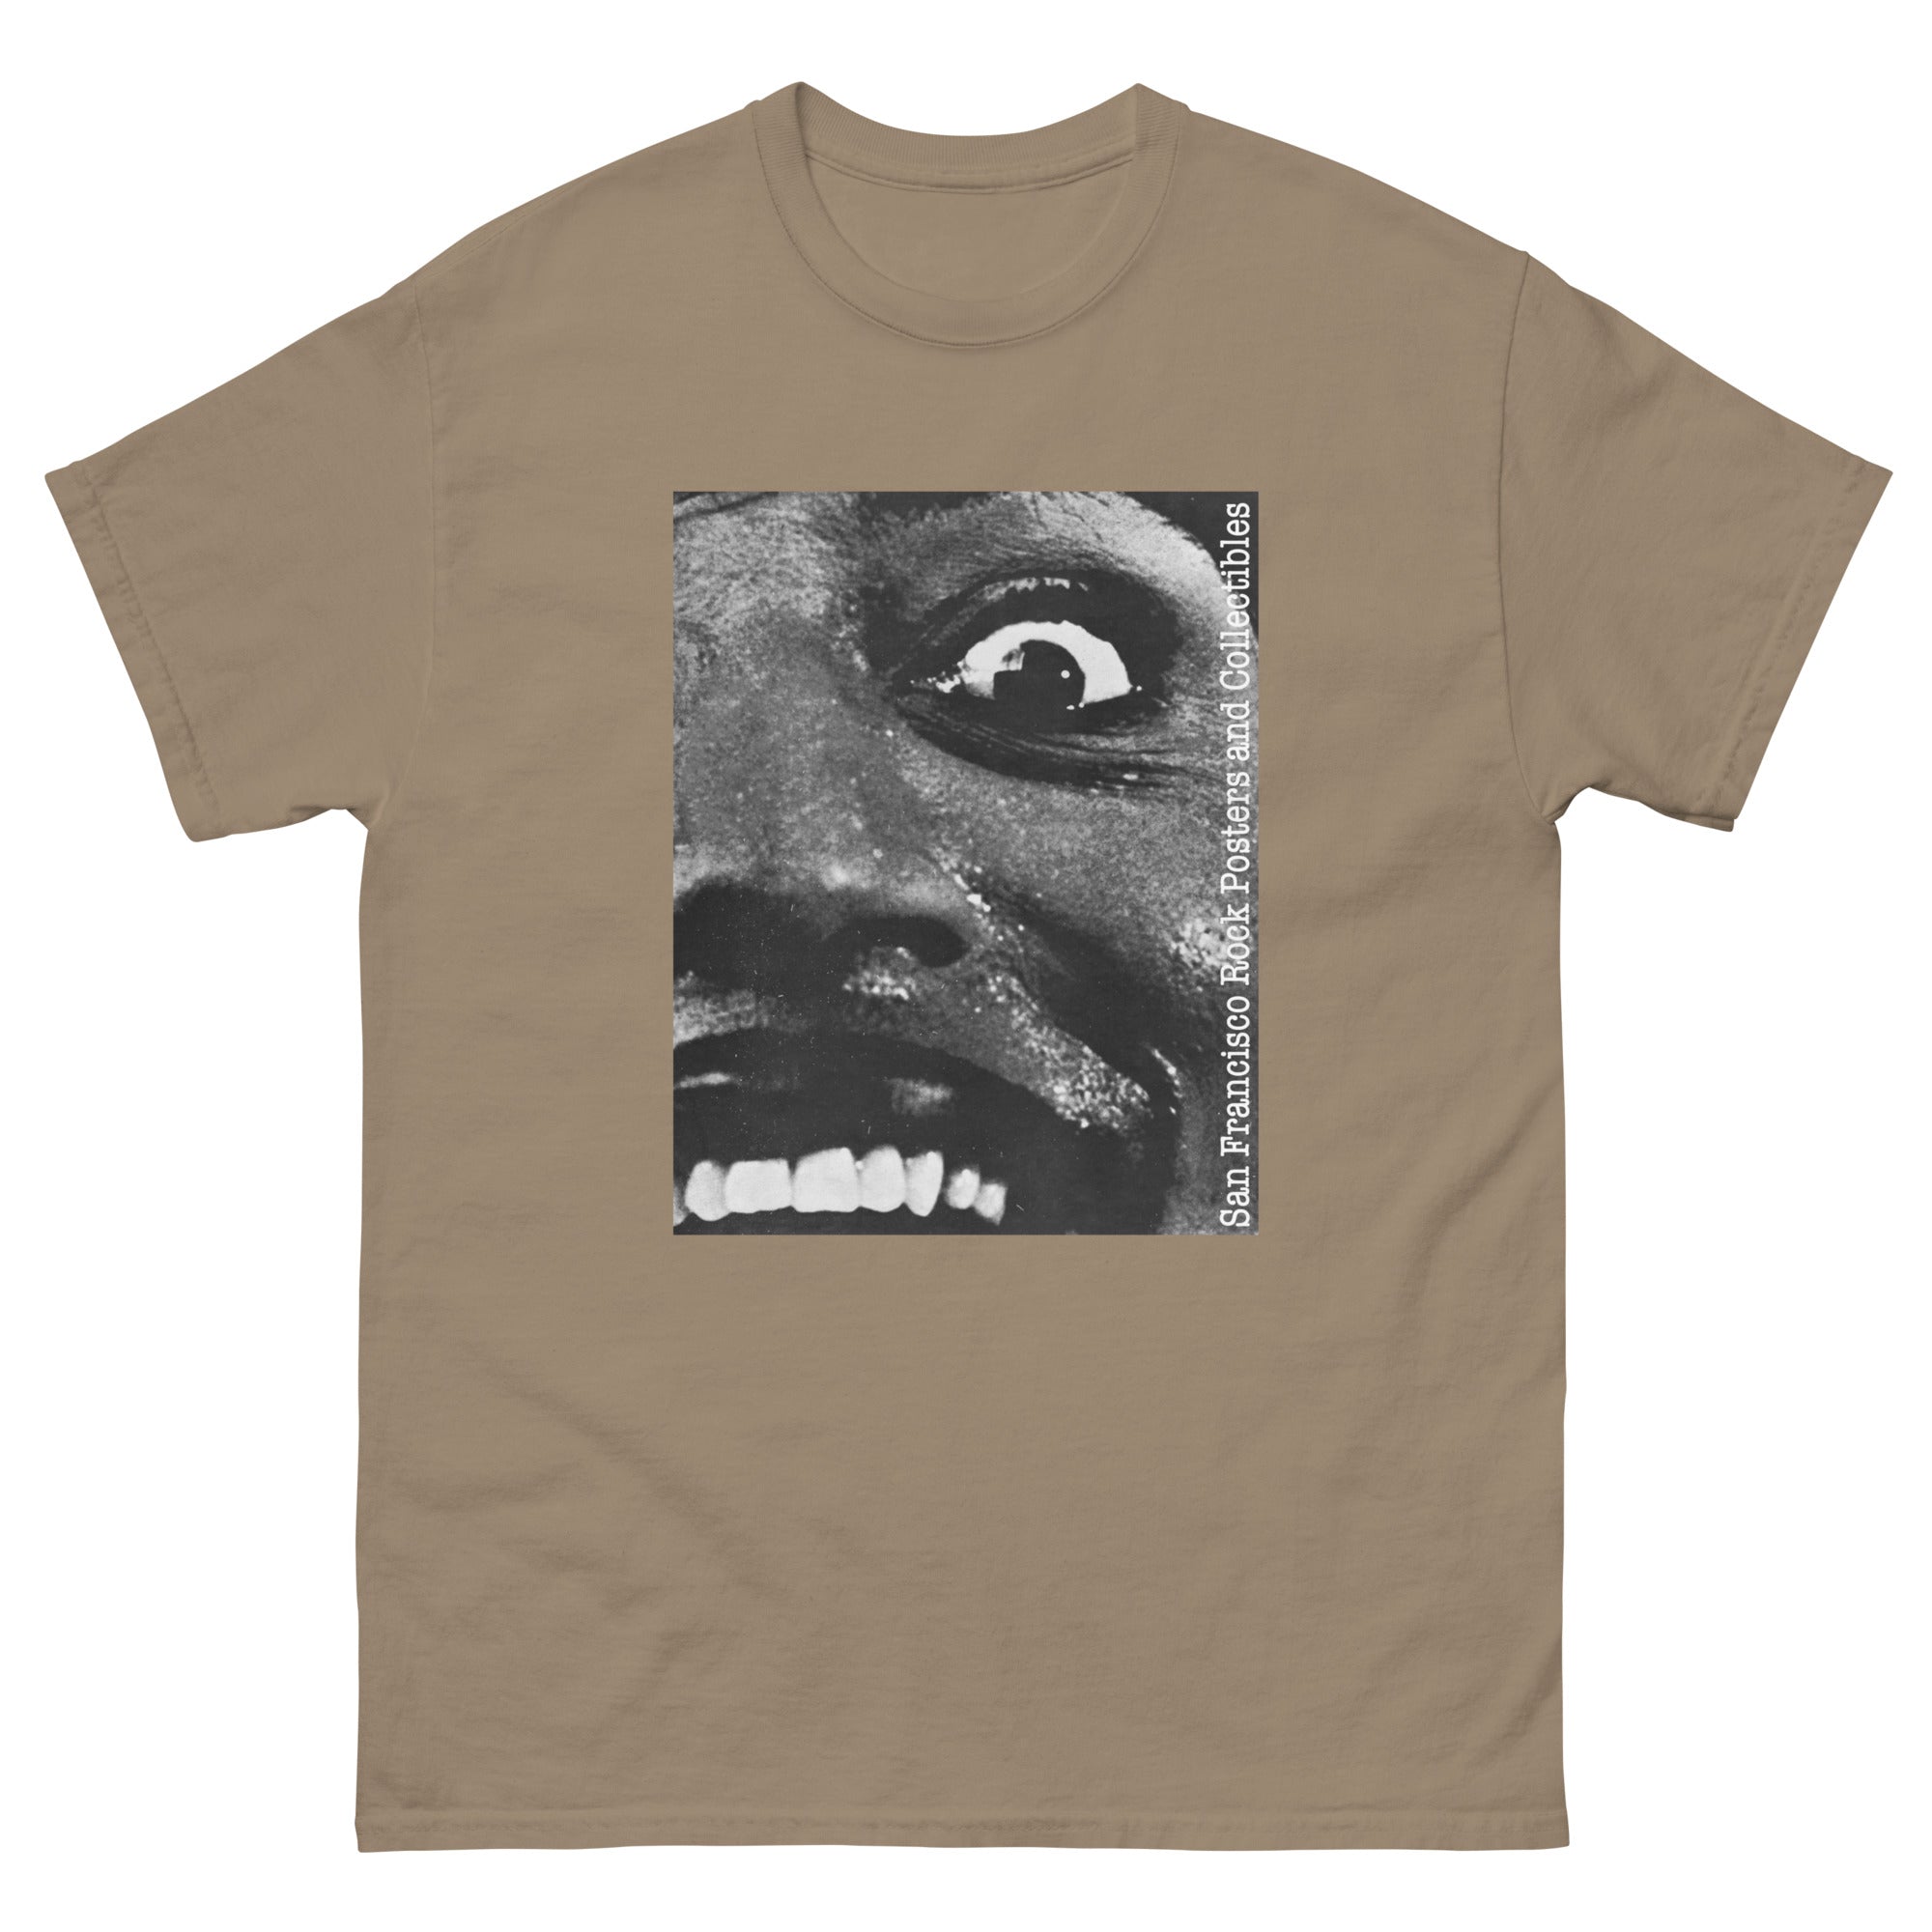 Rockposters.com - Little Richard Men's T-Shirt -Sand